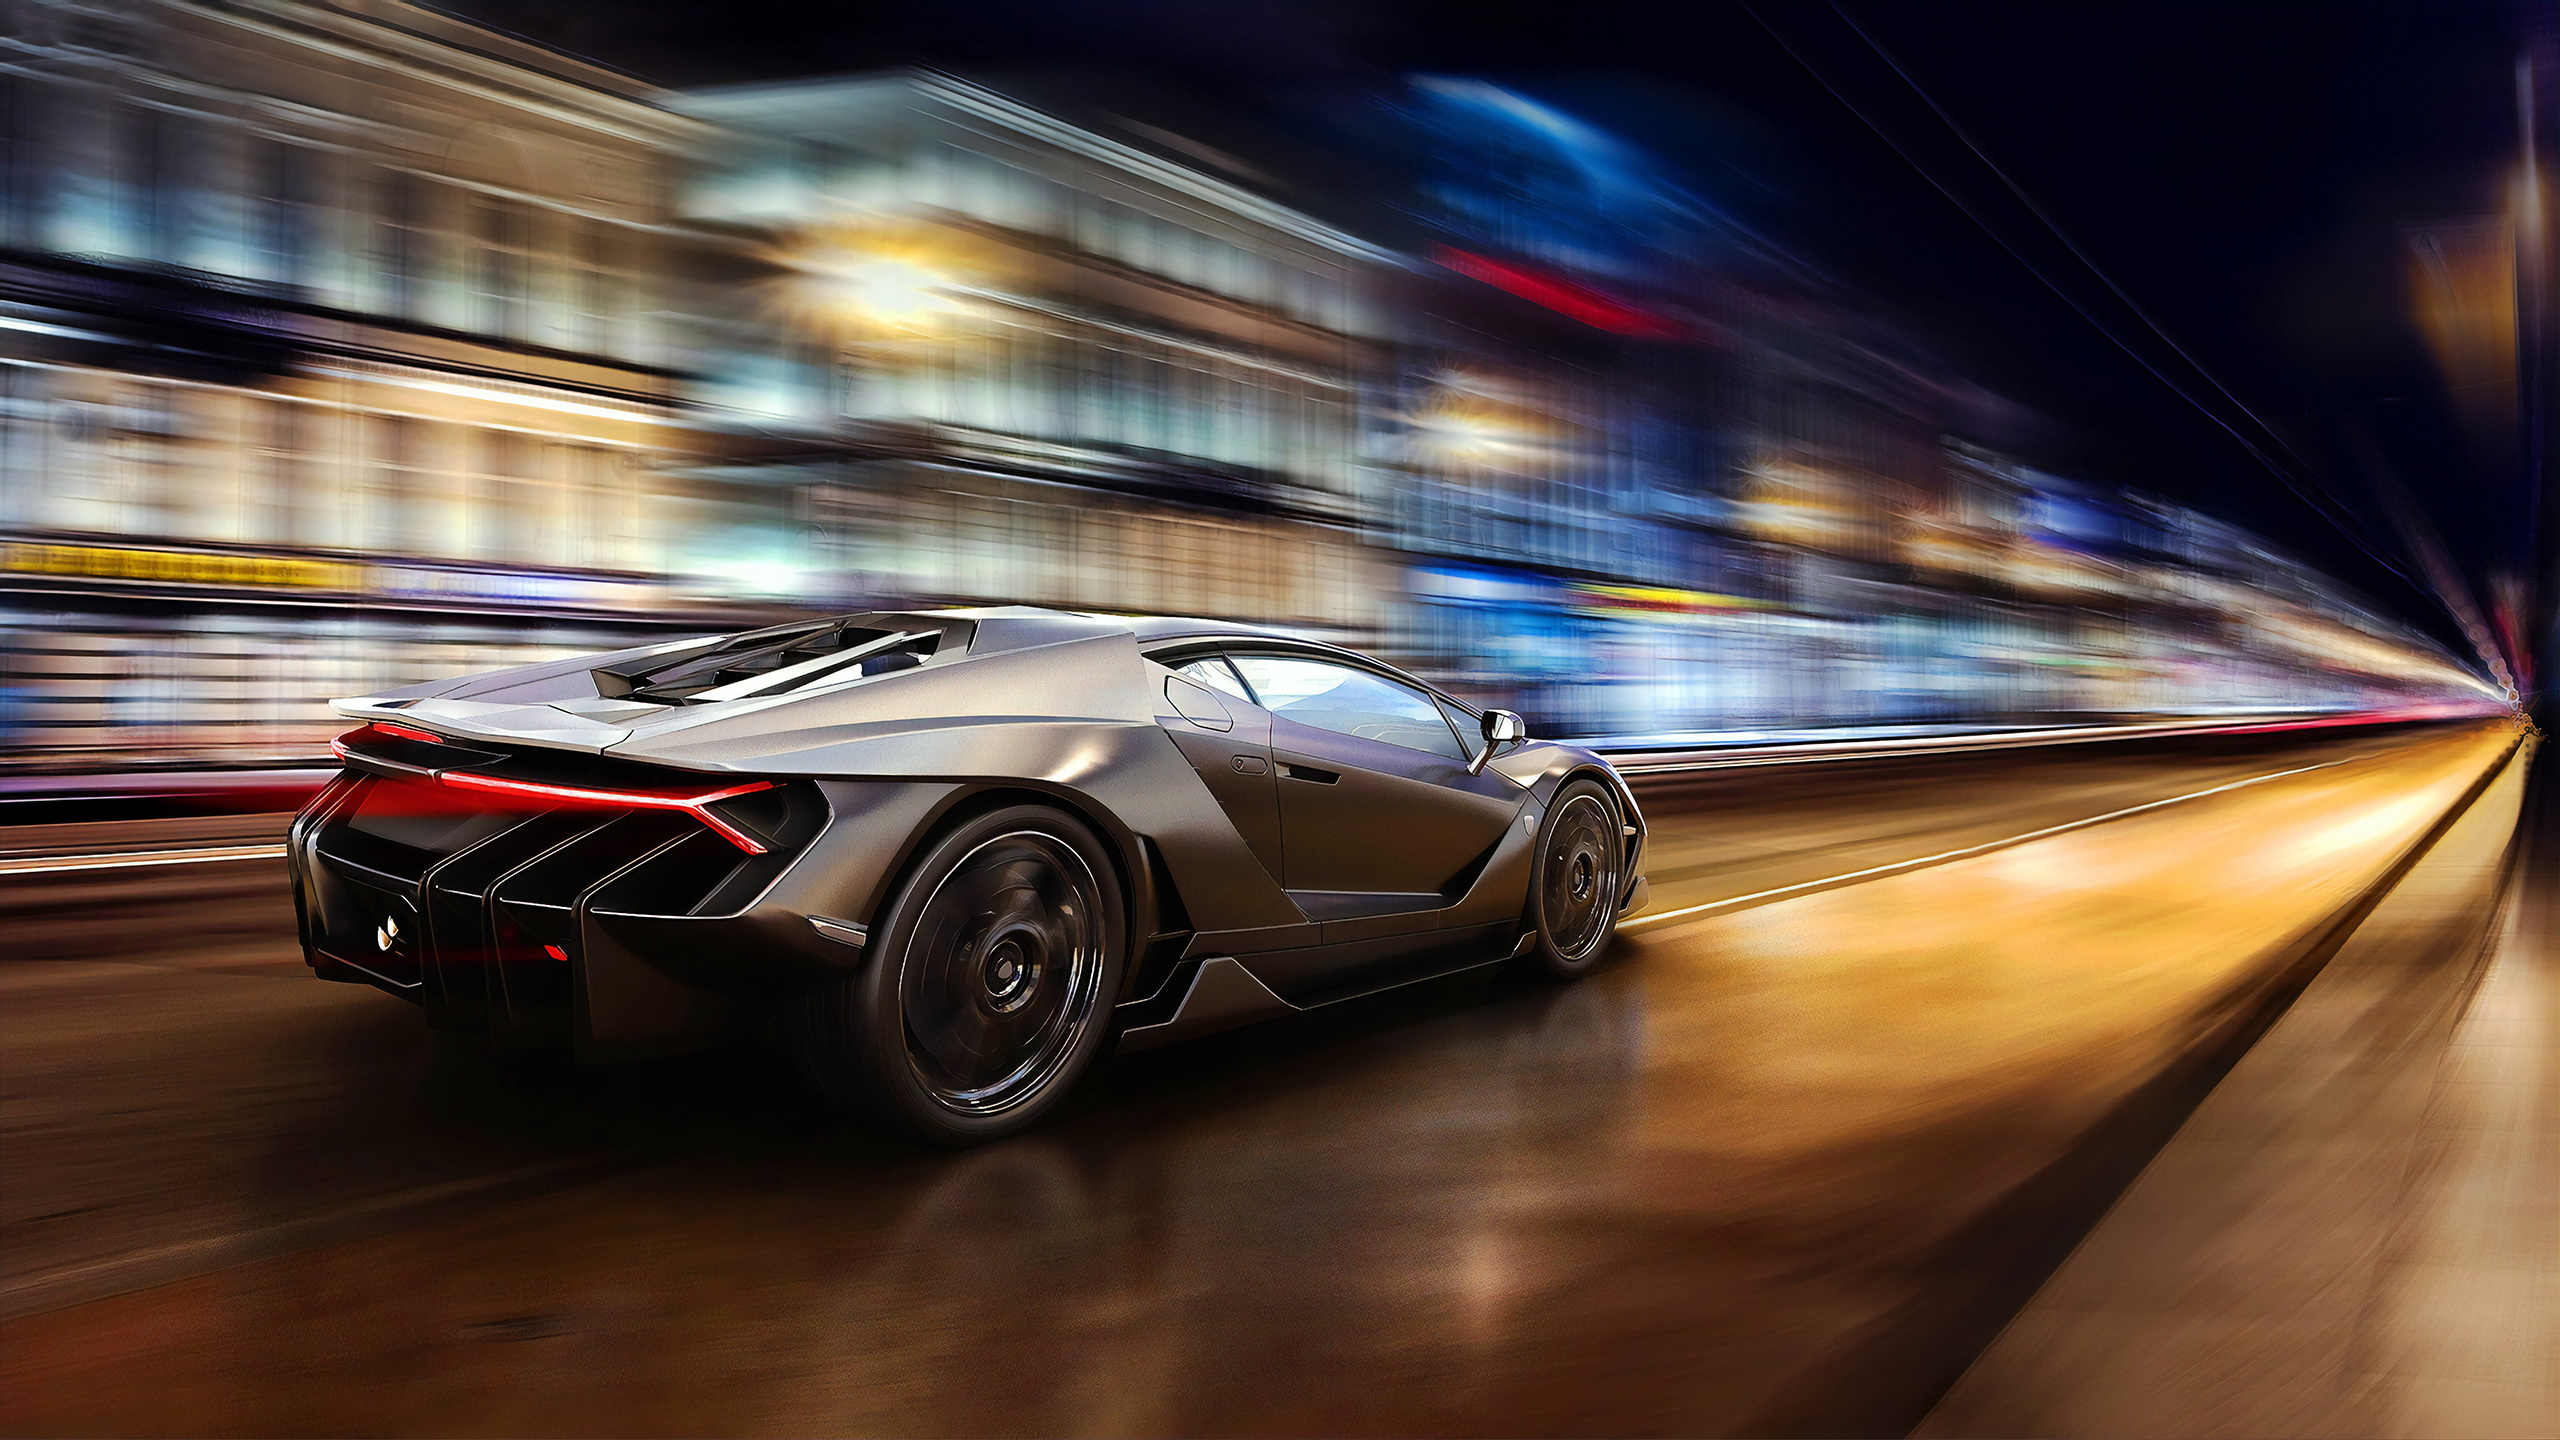 Lamborghini Centenario Digital Art, HD Cars, 4k Wallpapers, Images